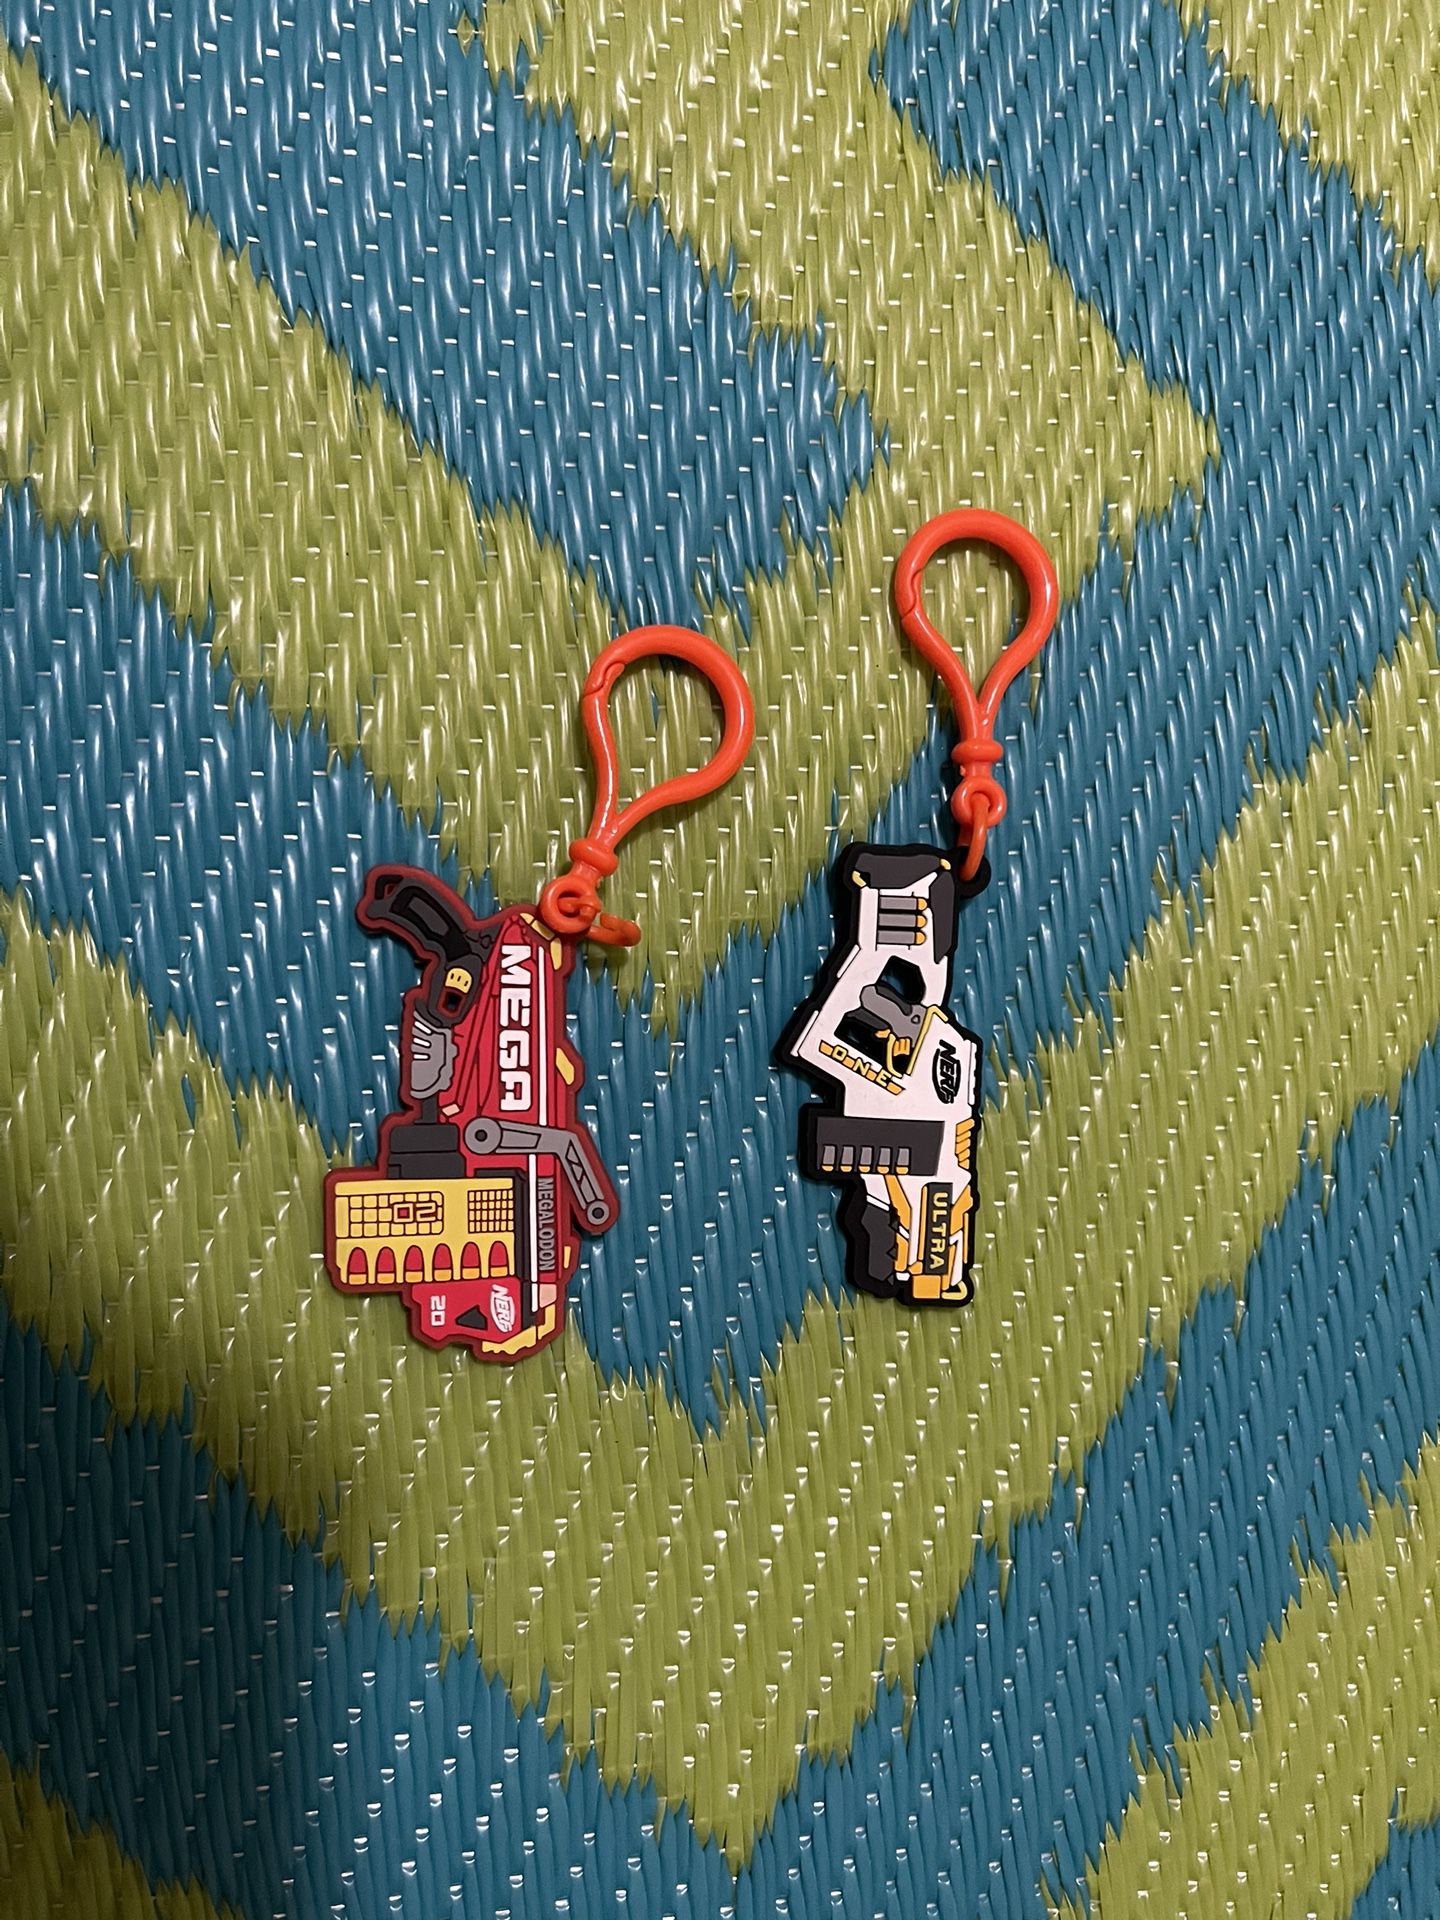 Flat Nerf Gun Rubber Toy 3" PVC Figure keychain Ornament Lot Of 2